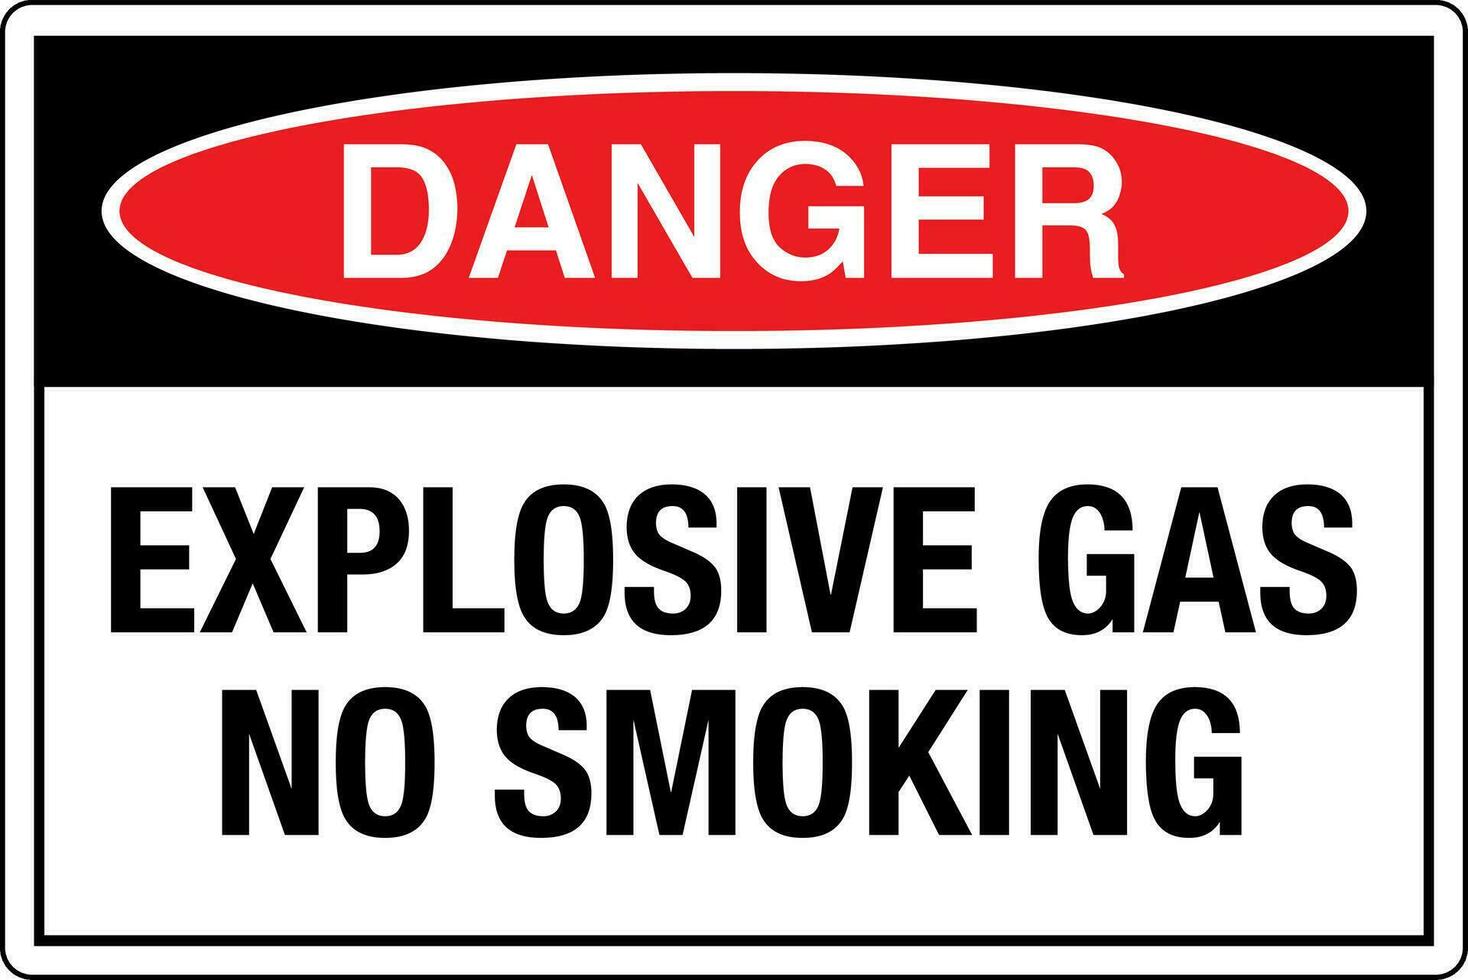 OSHA standards symbols registered workplace safety sign danger caution warning EXPLOSIVE GAS NO SMOKING vector